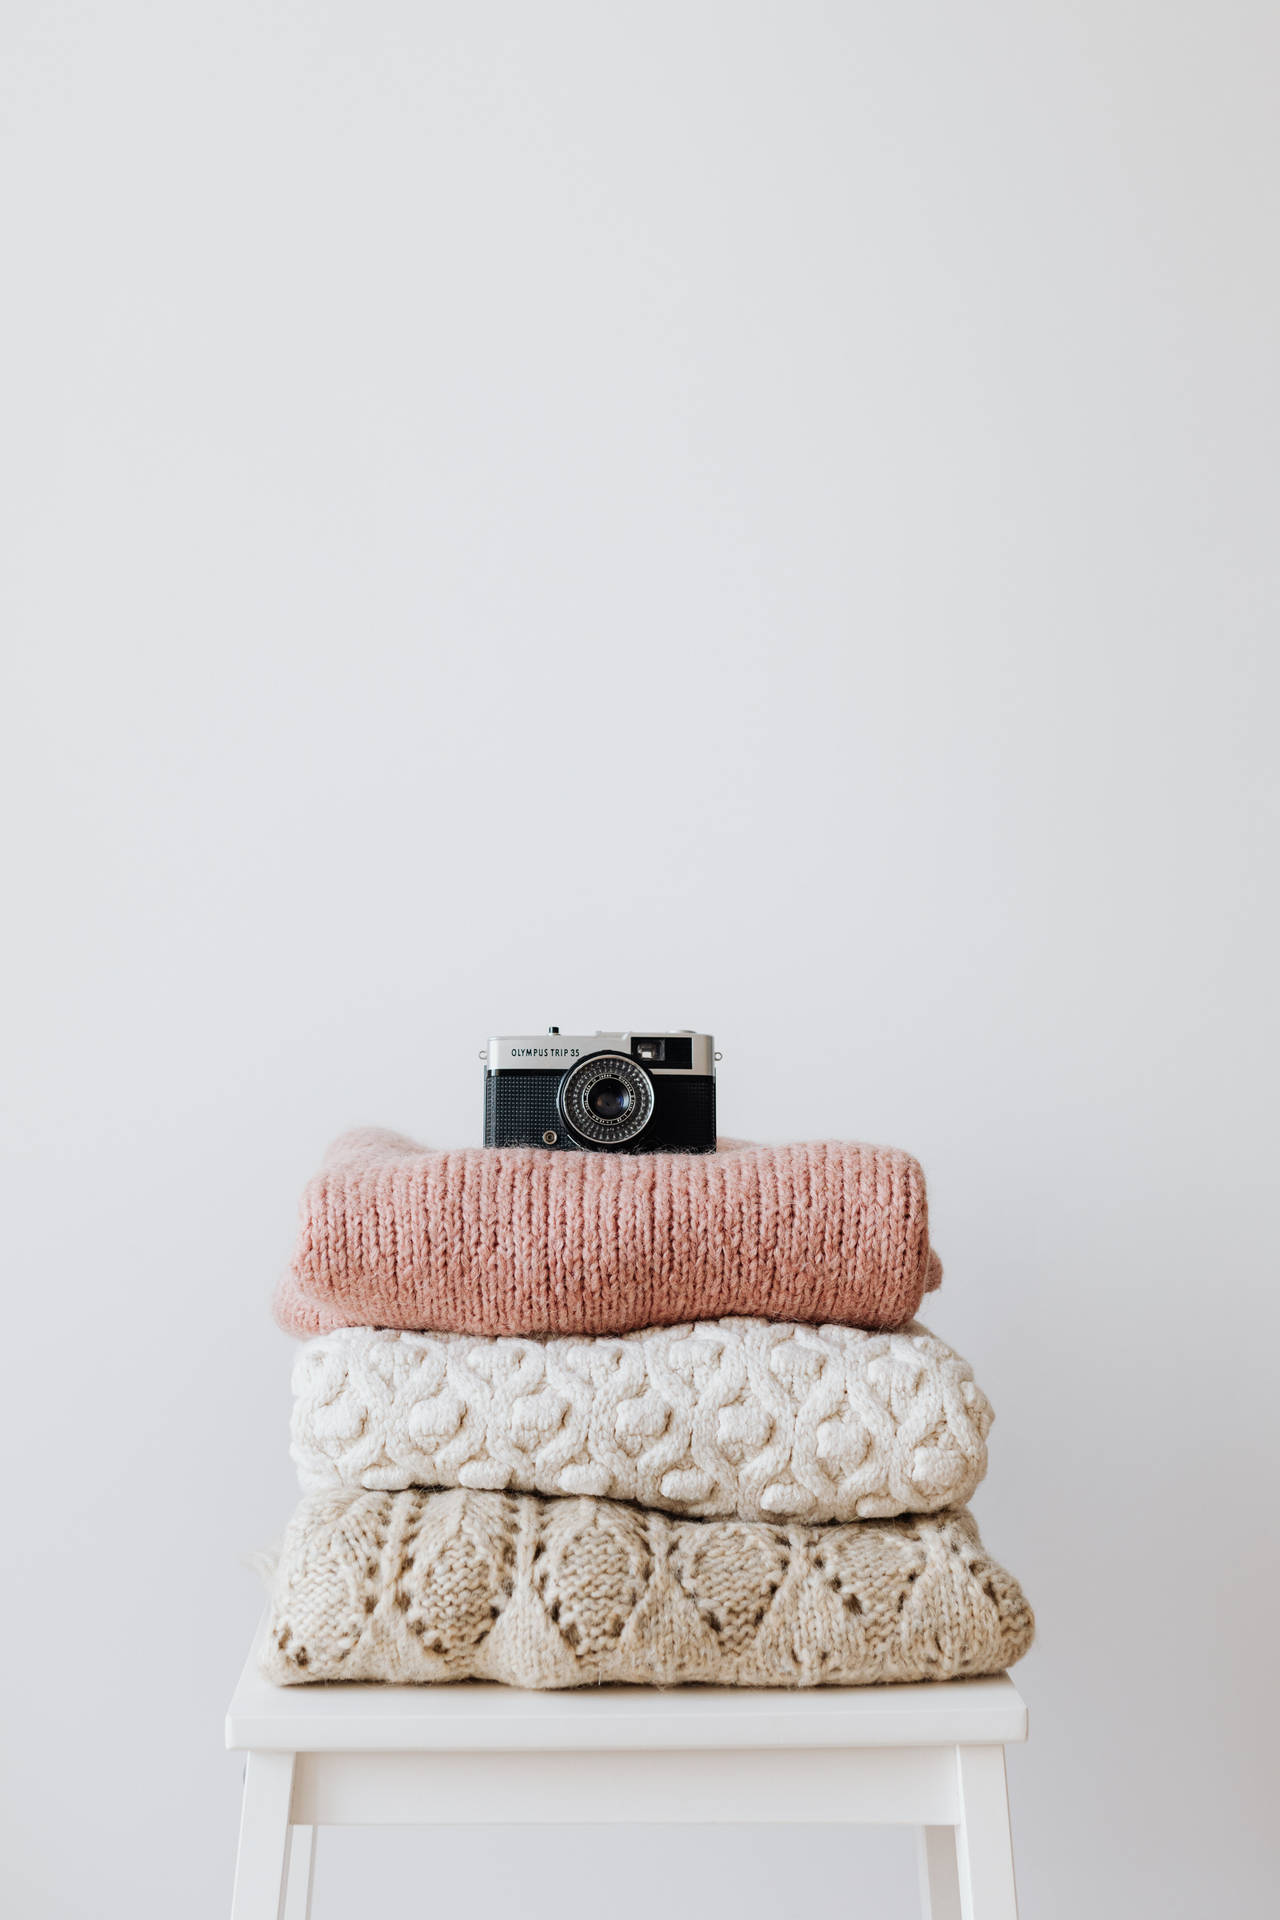 Camera Above Knitted Sweatshirt Background